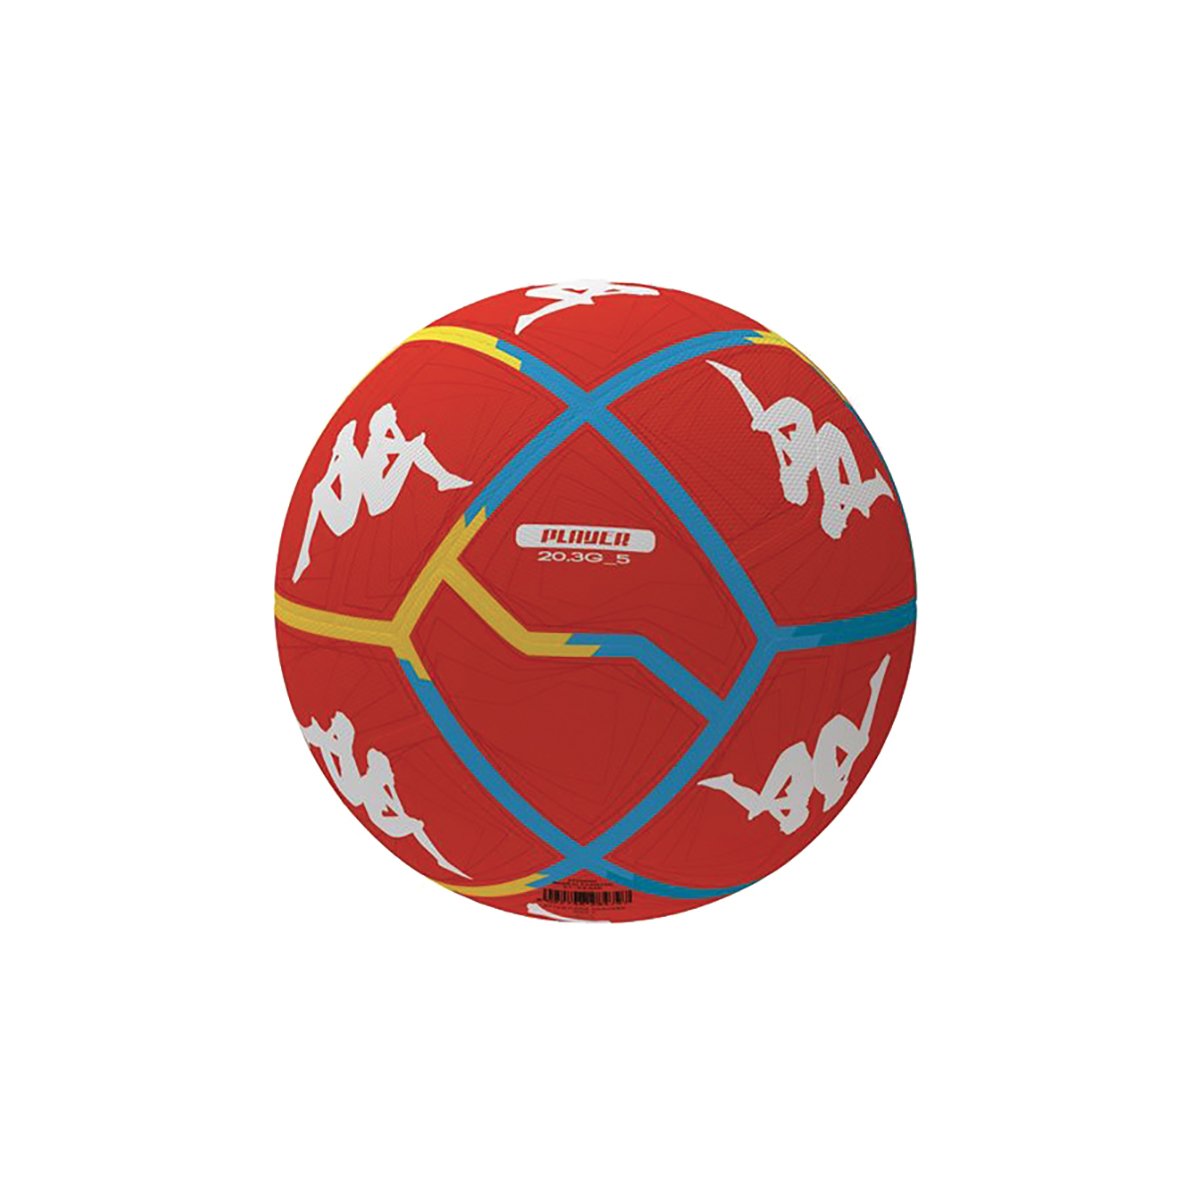 Balón de fútbol unisex 20.3G Naranja - Imagen 2